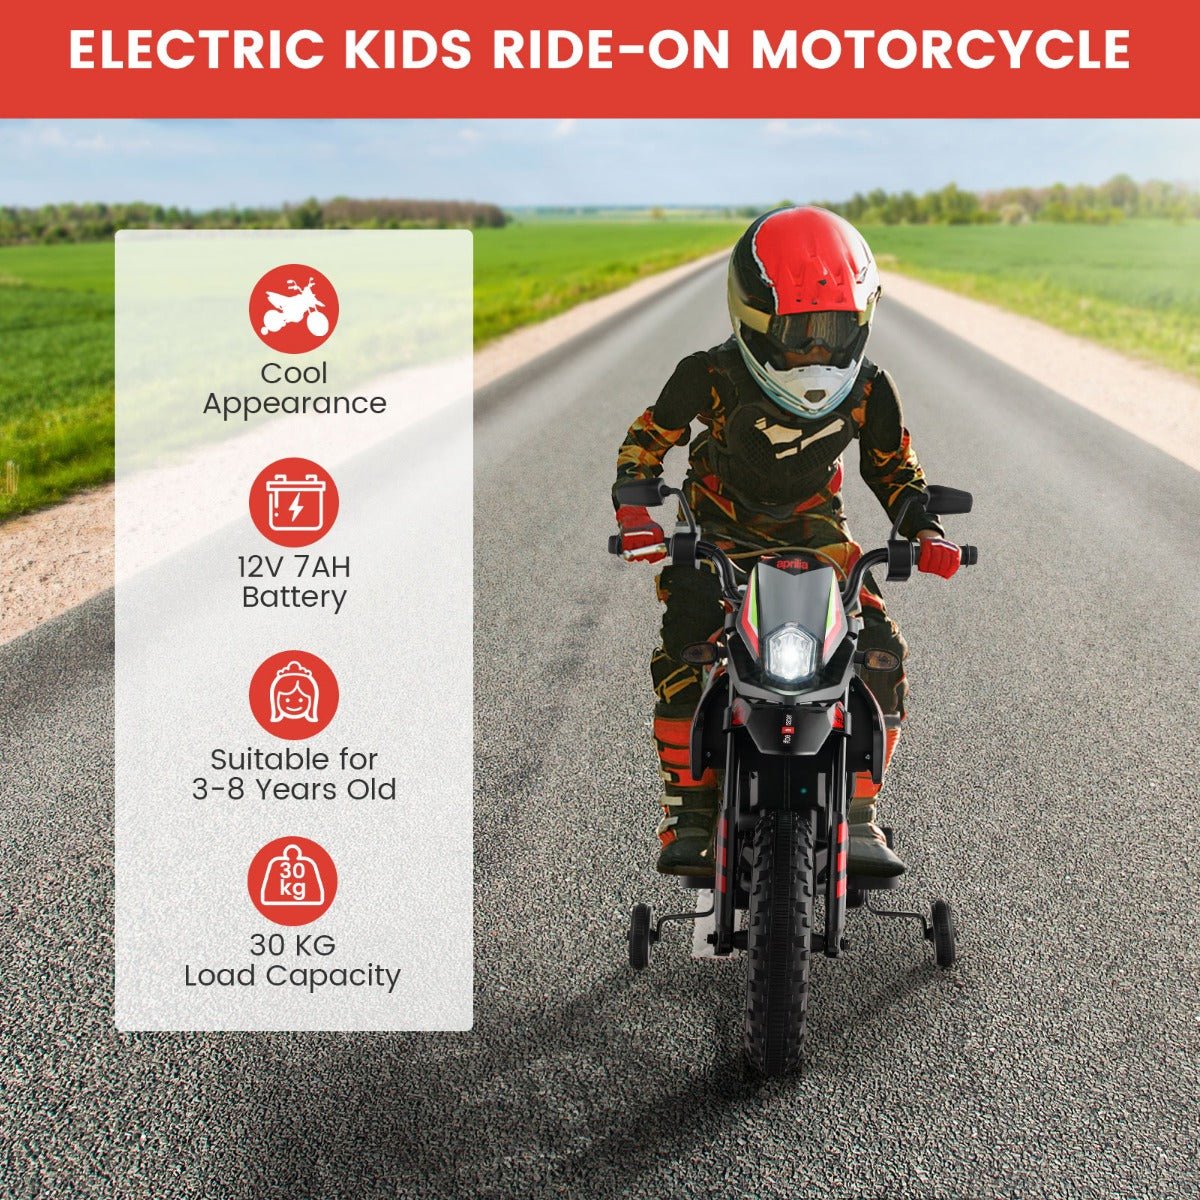 Red Hot Fun: Licensed Aprilia Kids Motorcycle, Red, Training Wheels